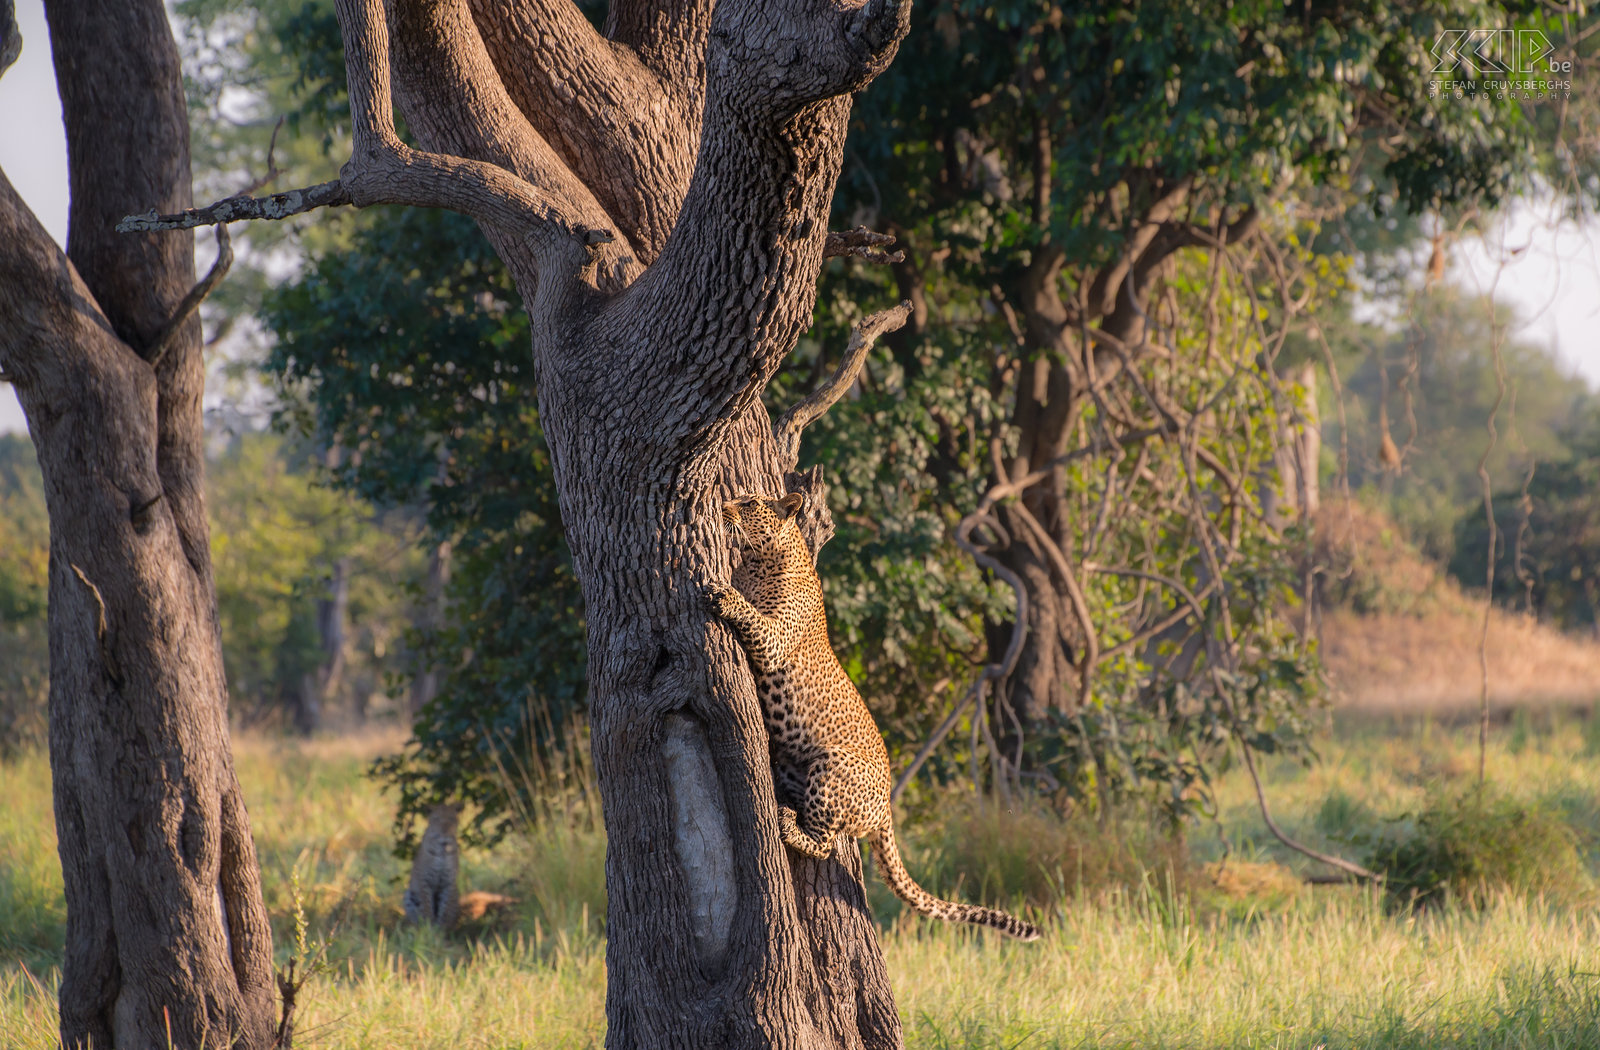 South Luangwa - Luipaard in boom Met een hoge sprong klimt het luipaard behendig in de boom. Stefan Cruysberghs